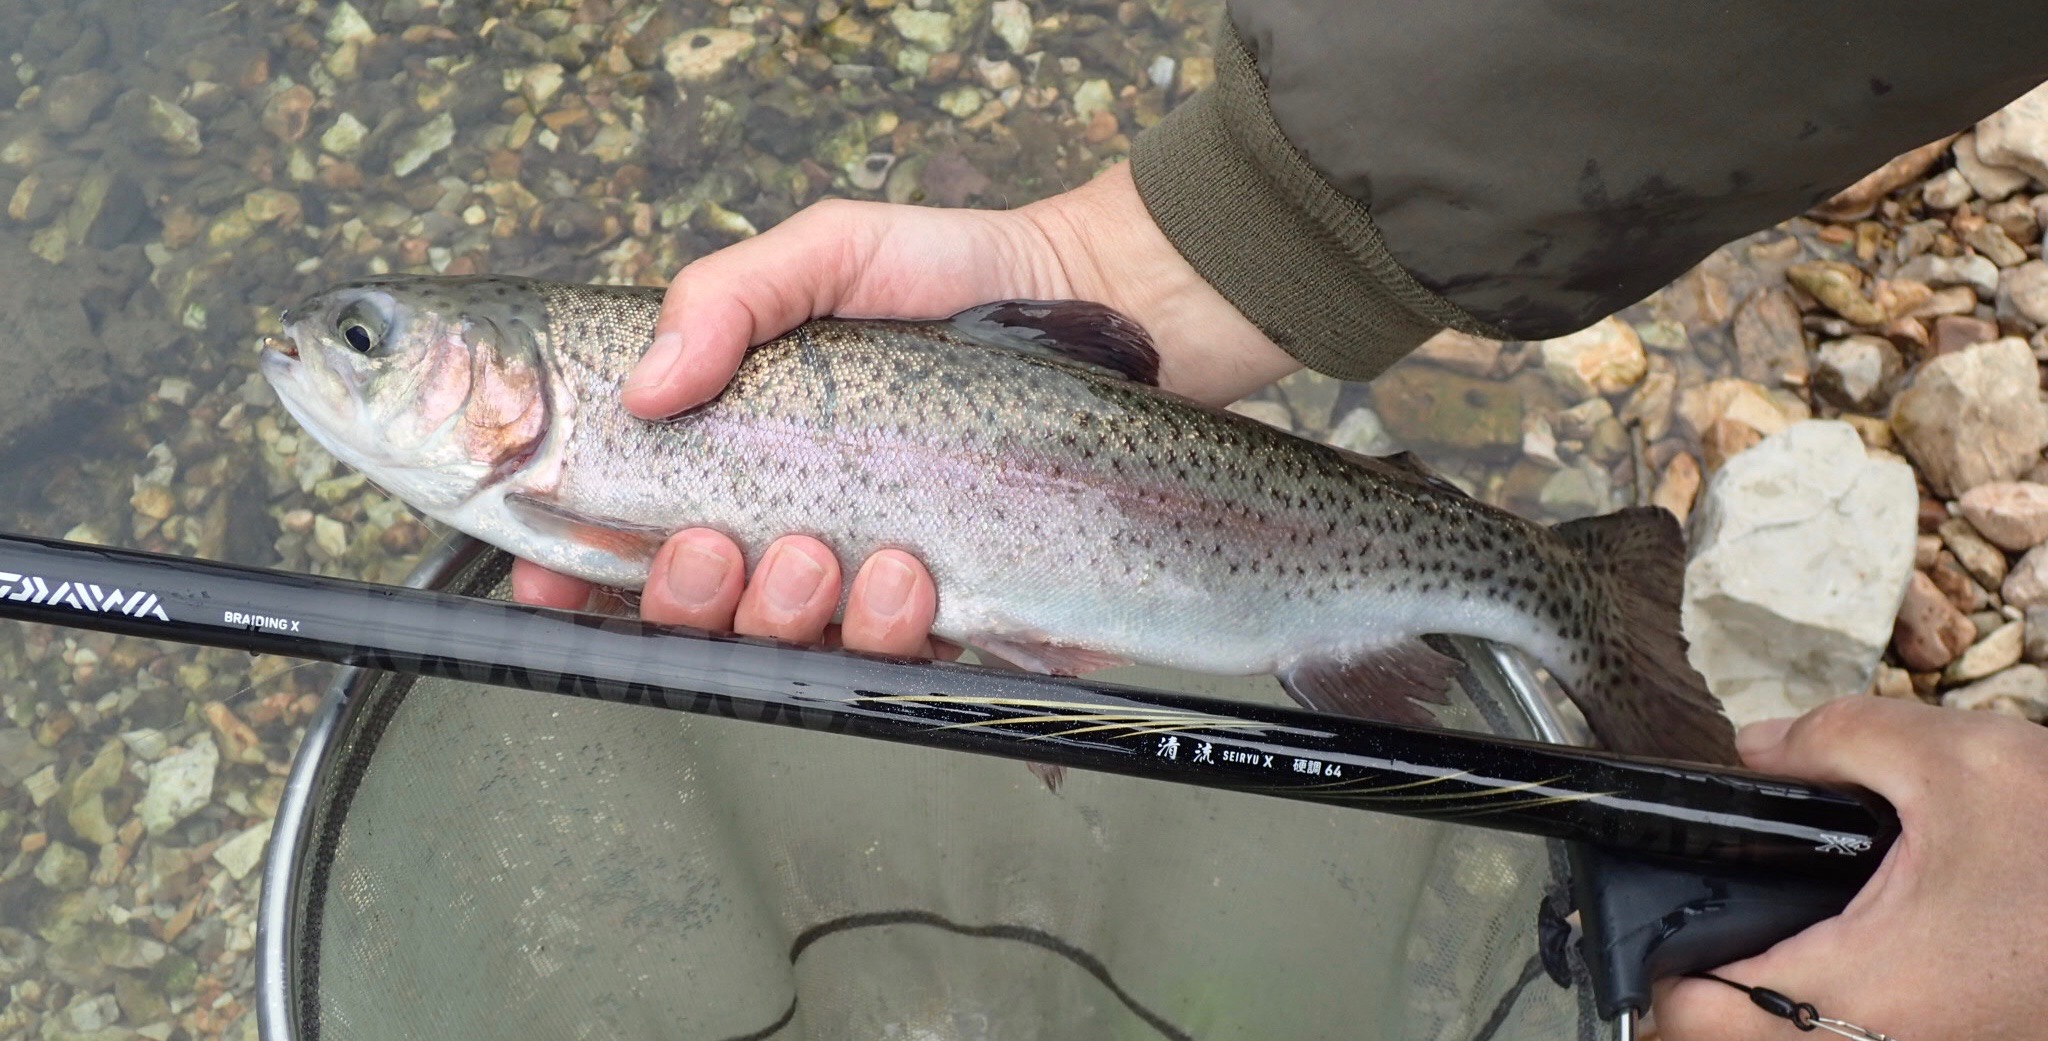 Angler holding rainbow trout, Seiryu X 64 rod and net.